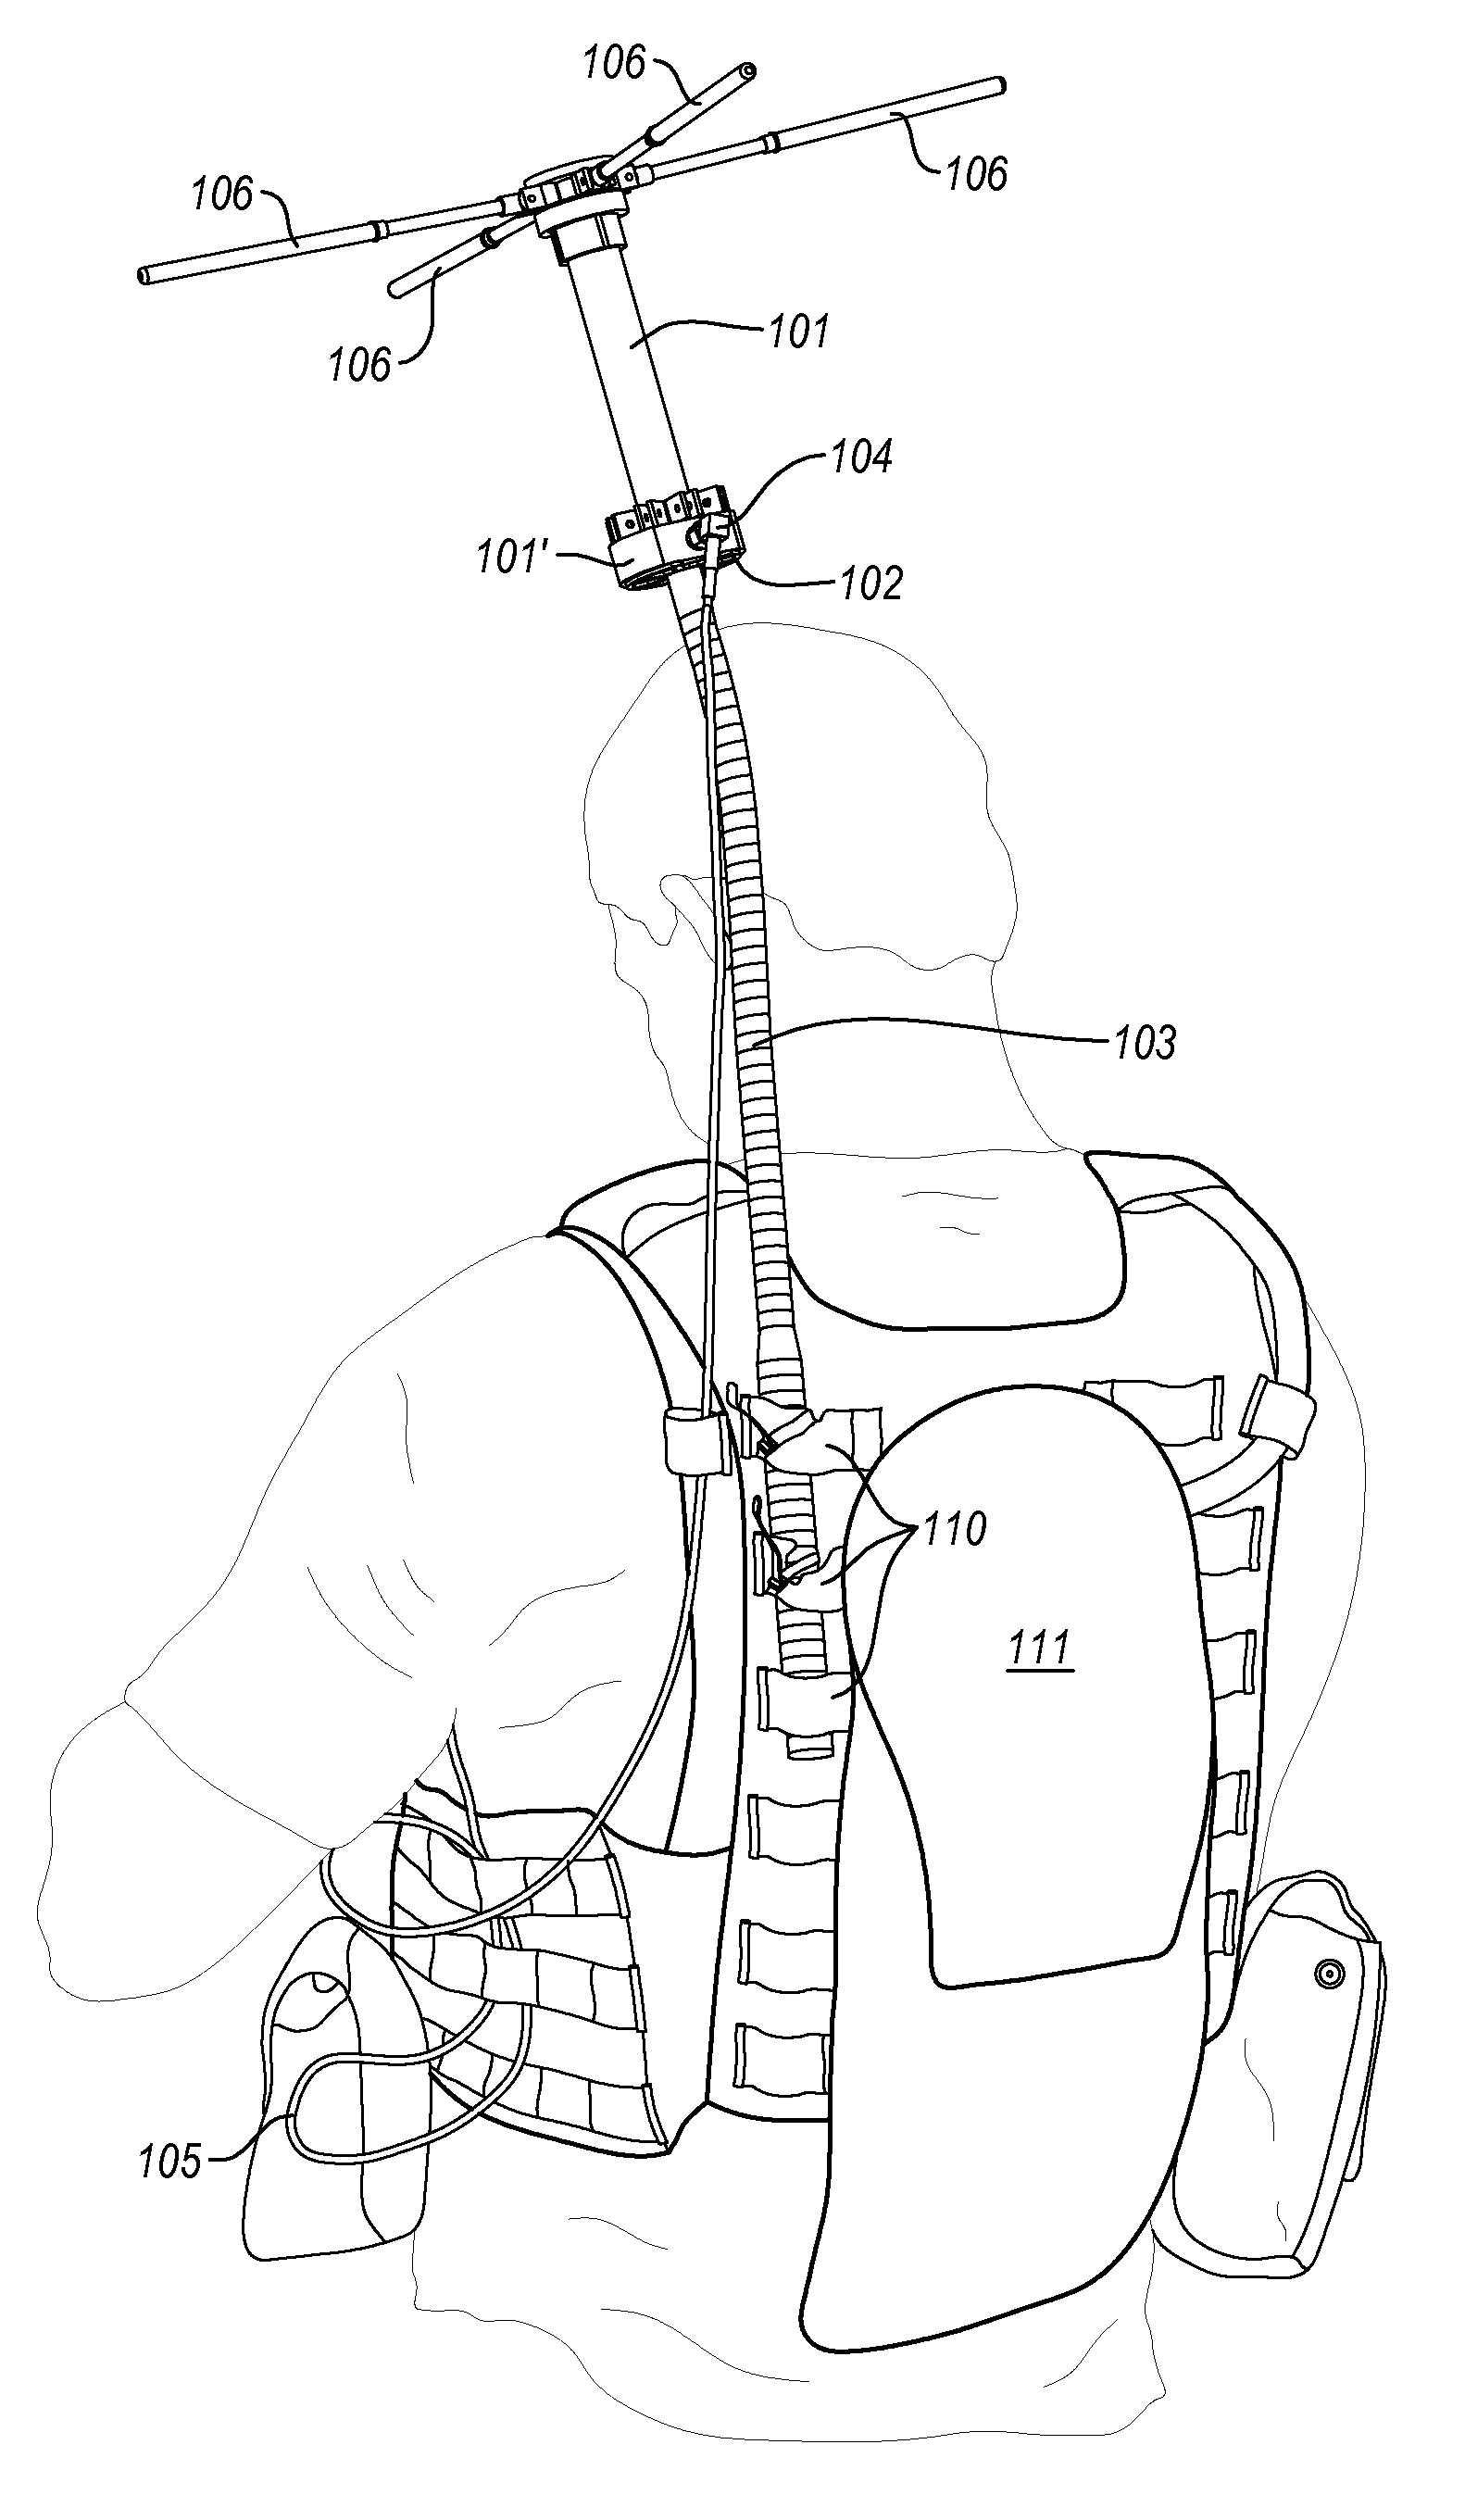 Antenna mount